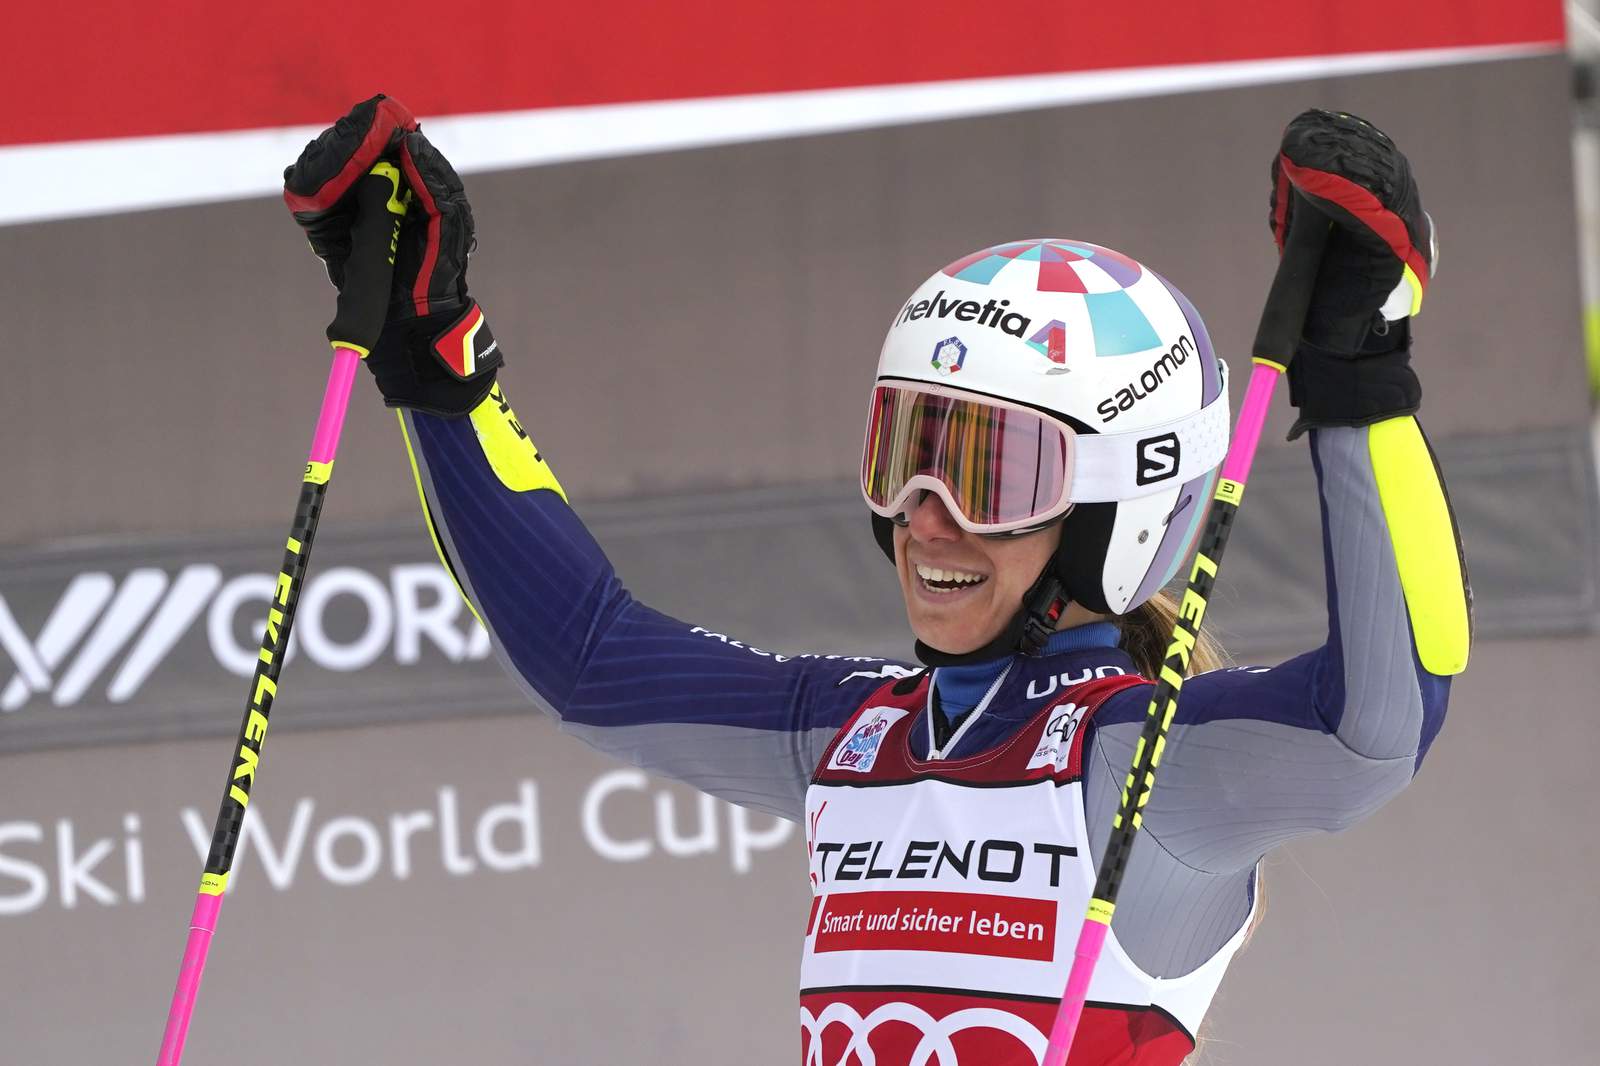 Italian skier Bassino gets 2nd straight GS win, Shiffrin 6th